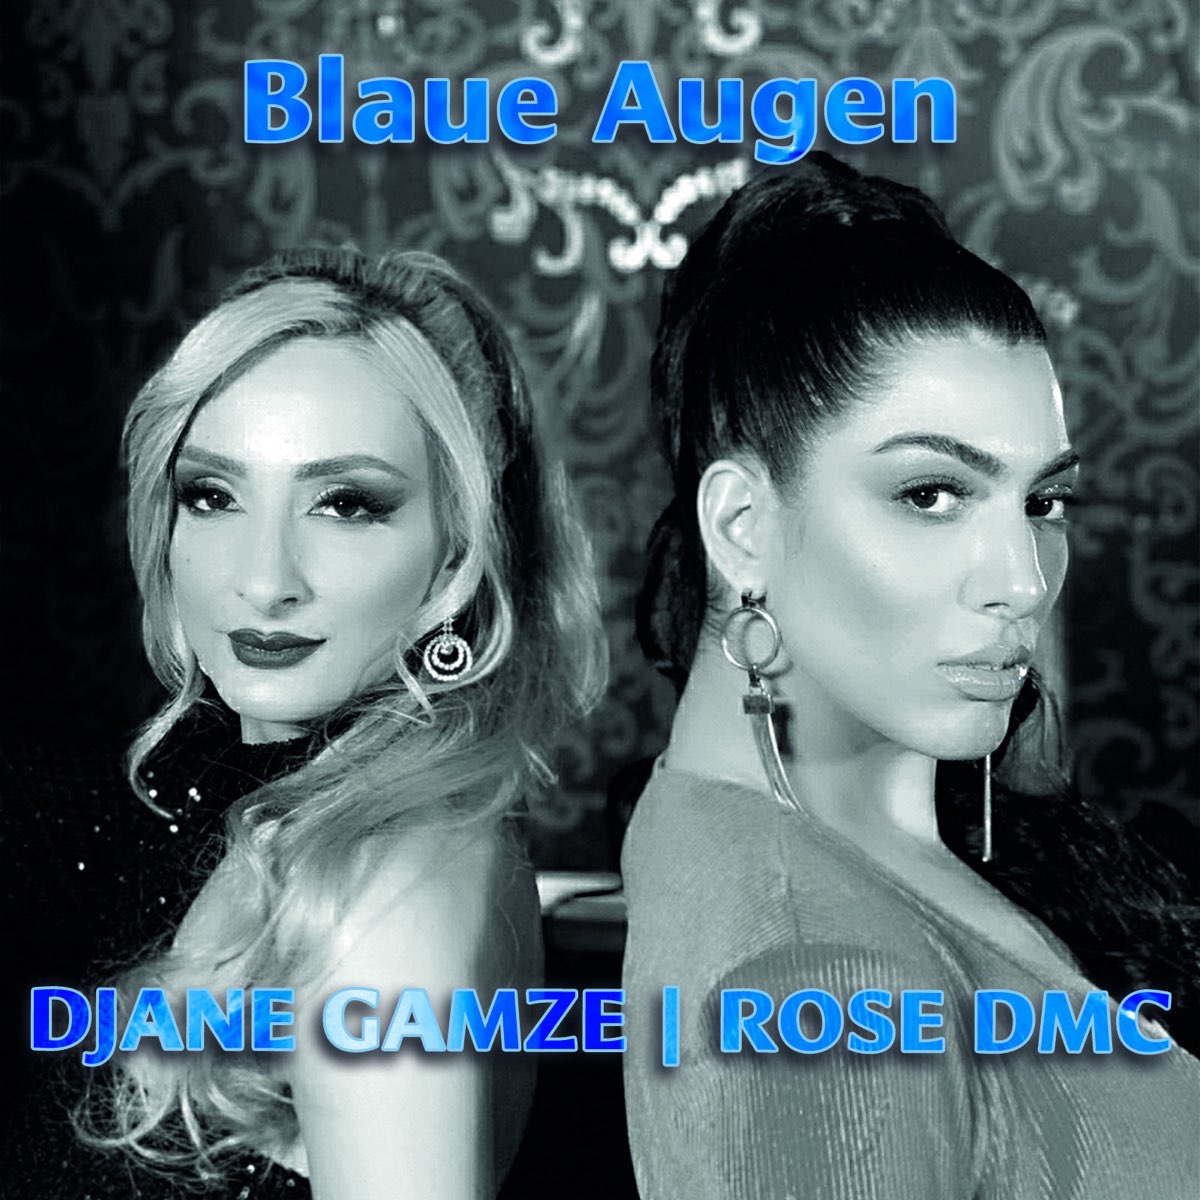 Blaue Augen - Single by DJANE GAMZE & ROSE DMC on Apple Music